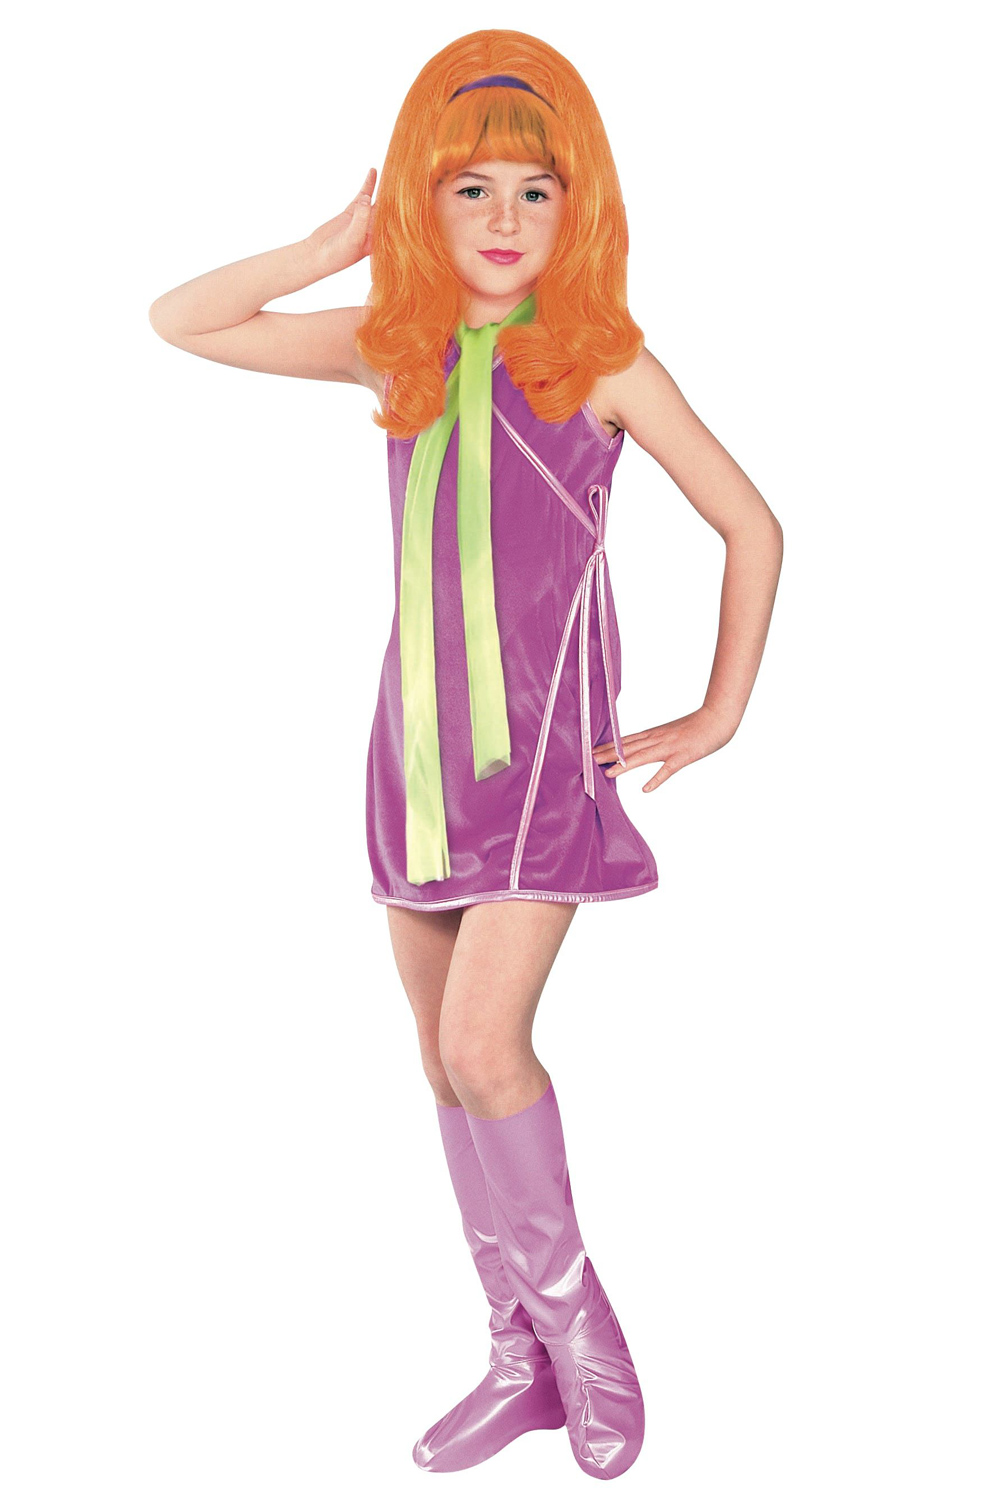 Daphne Blake Child Costume - PureCostumes.com